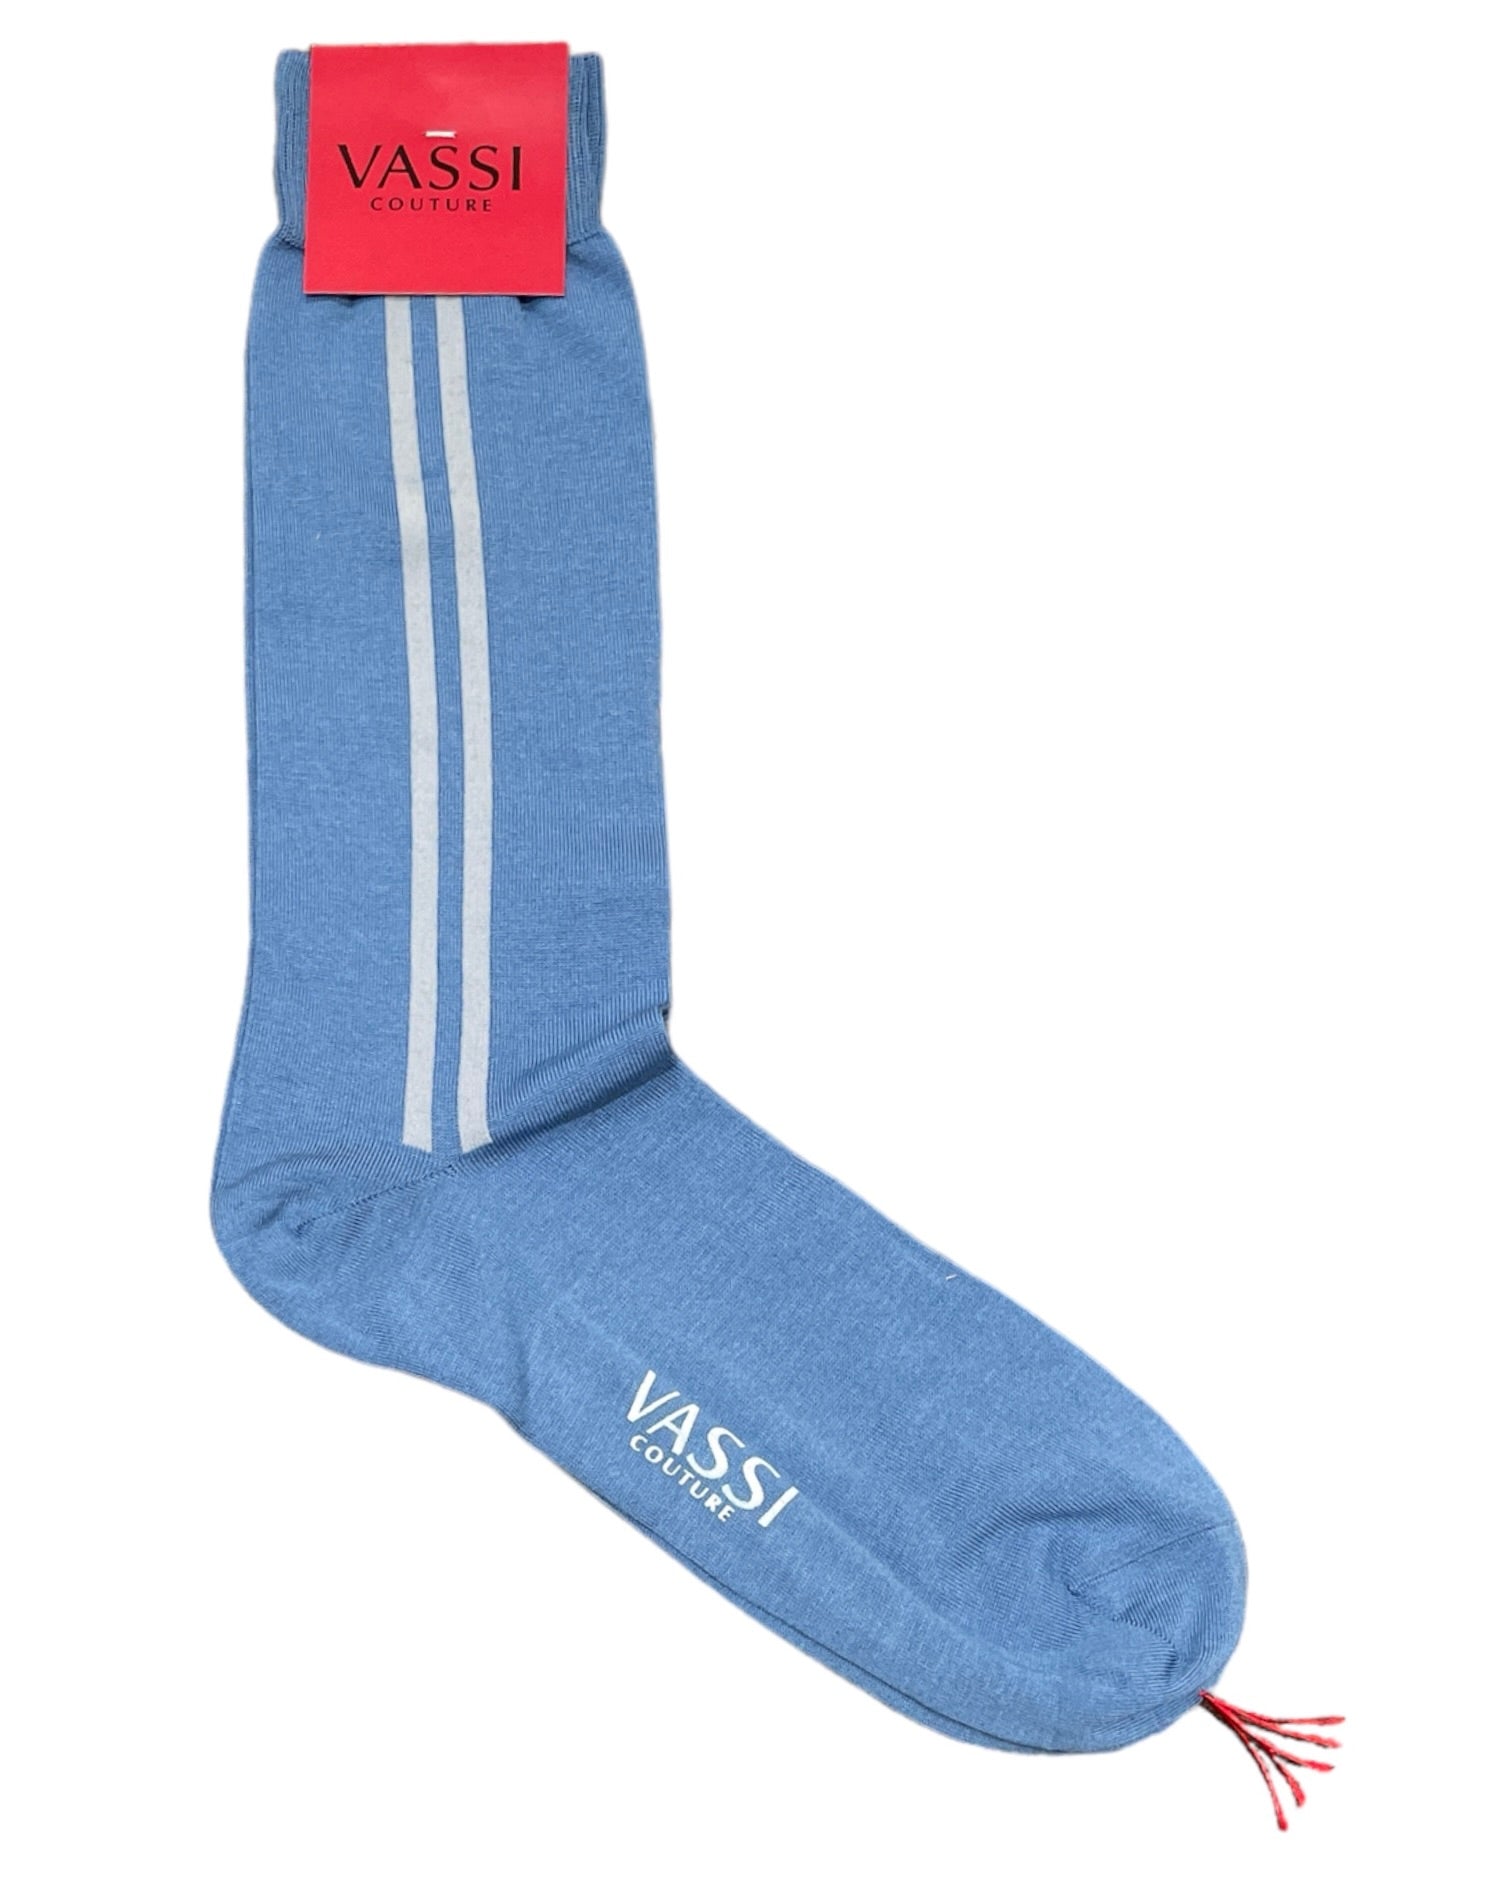 Double Striped Comfort-Socks - Light blue-Grey Socks